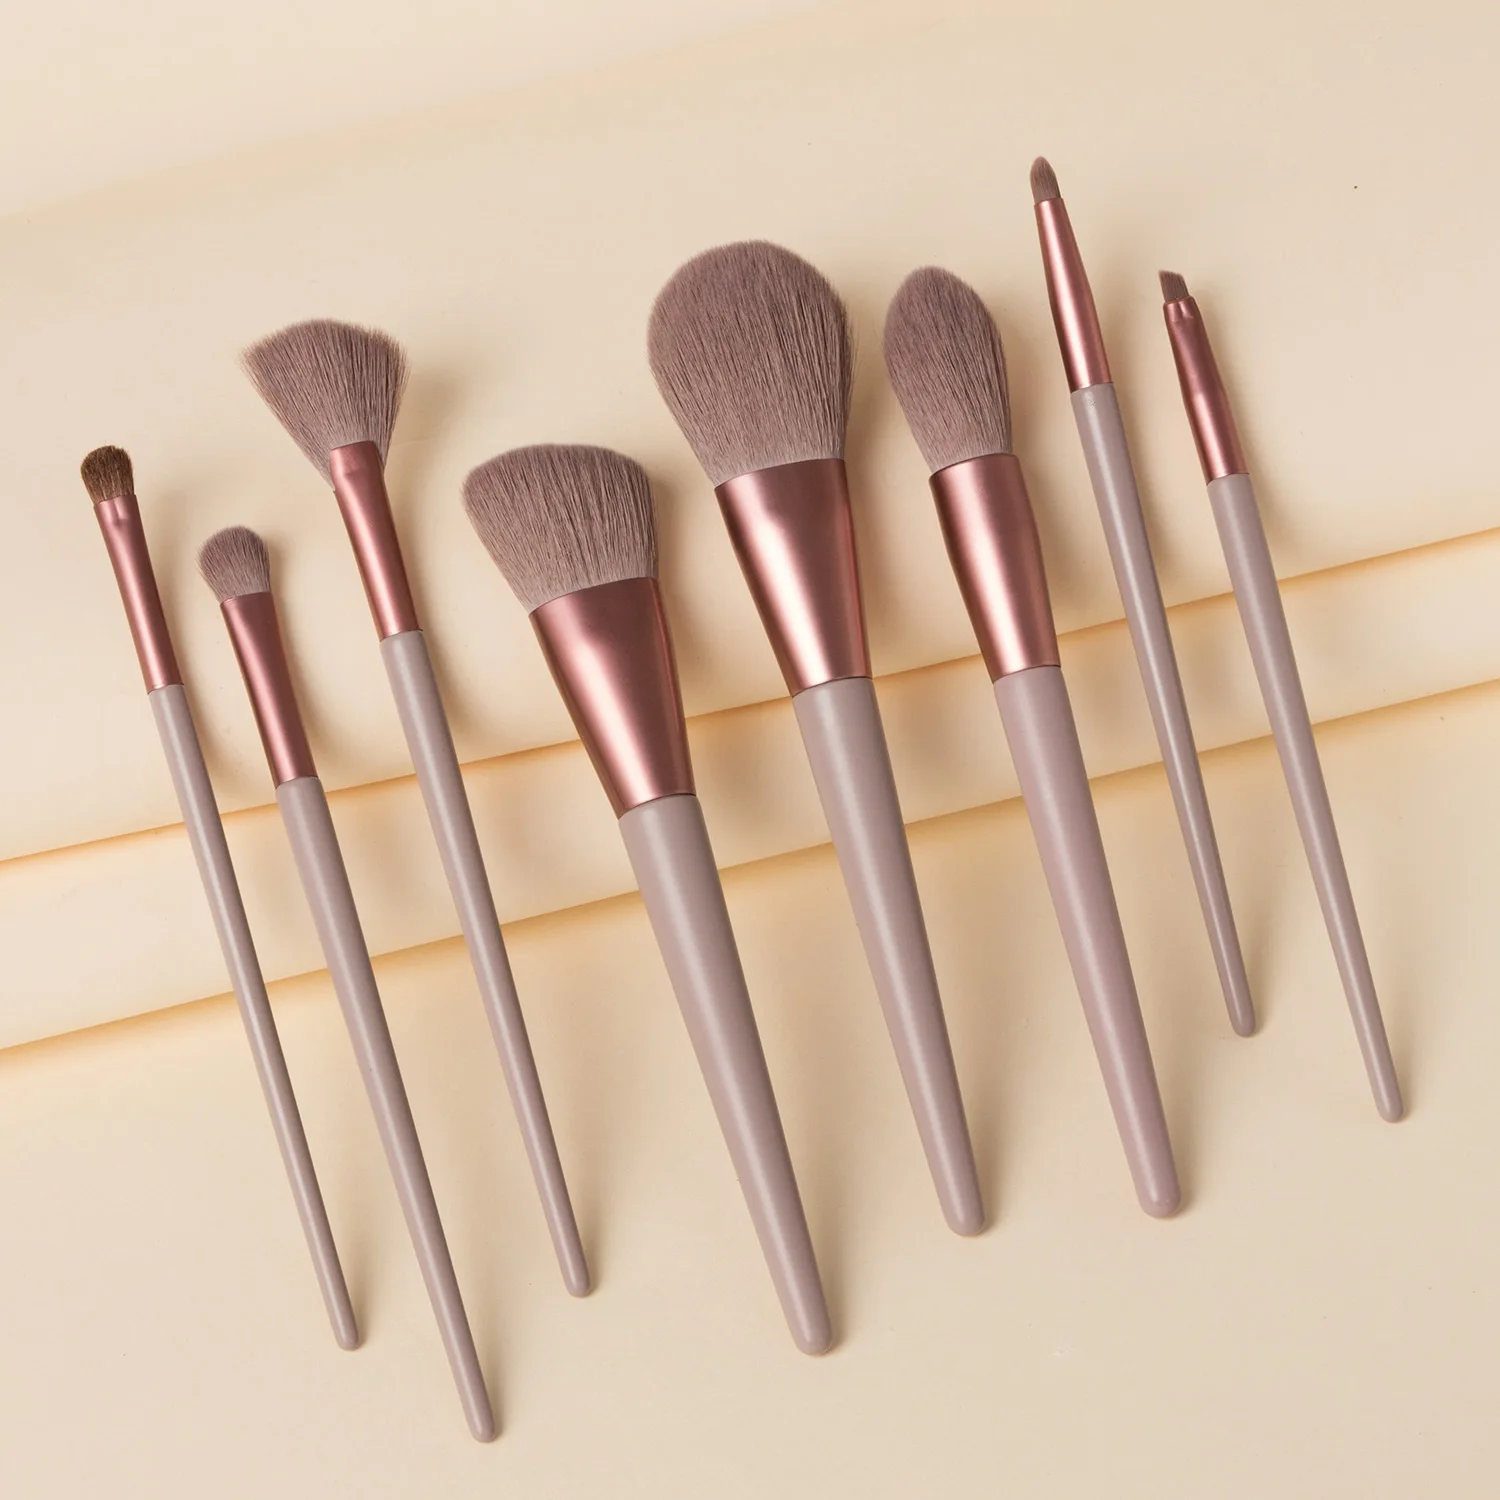 

8Pcs/set Make Up Tool Makeup Brushes Set Cosmetic Powder Foundation Blush Highlight Eyebrow Brush Kit Horse Hair Eyeshadow Brush